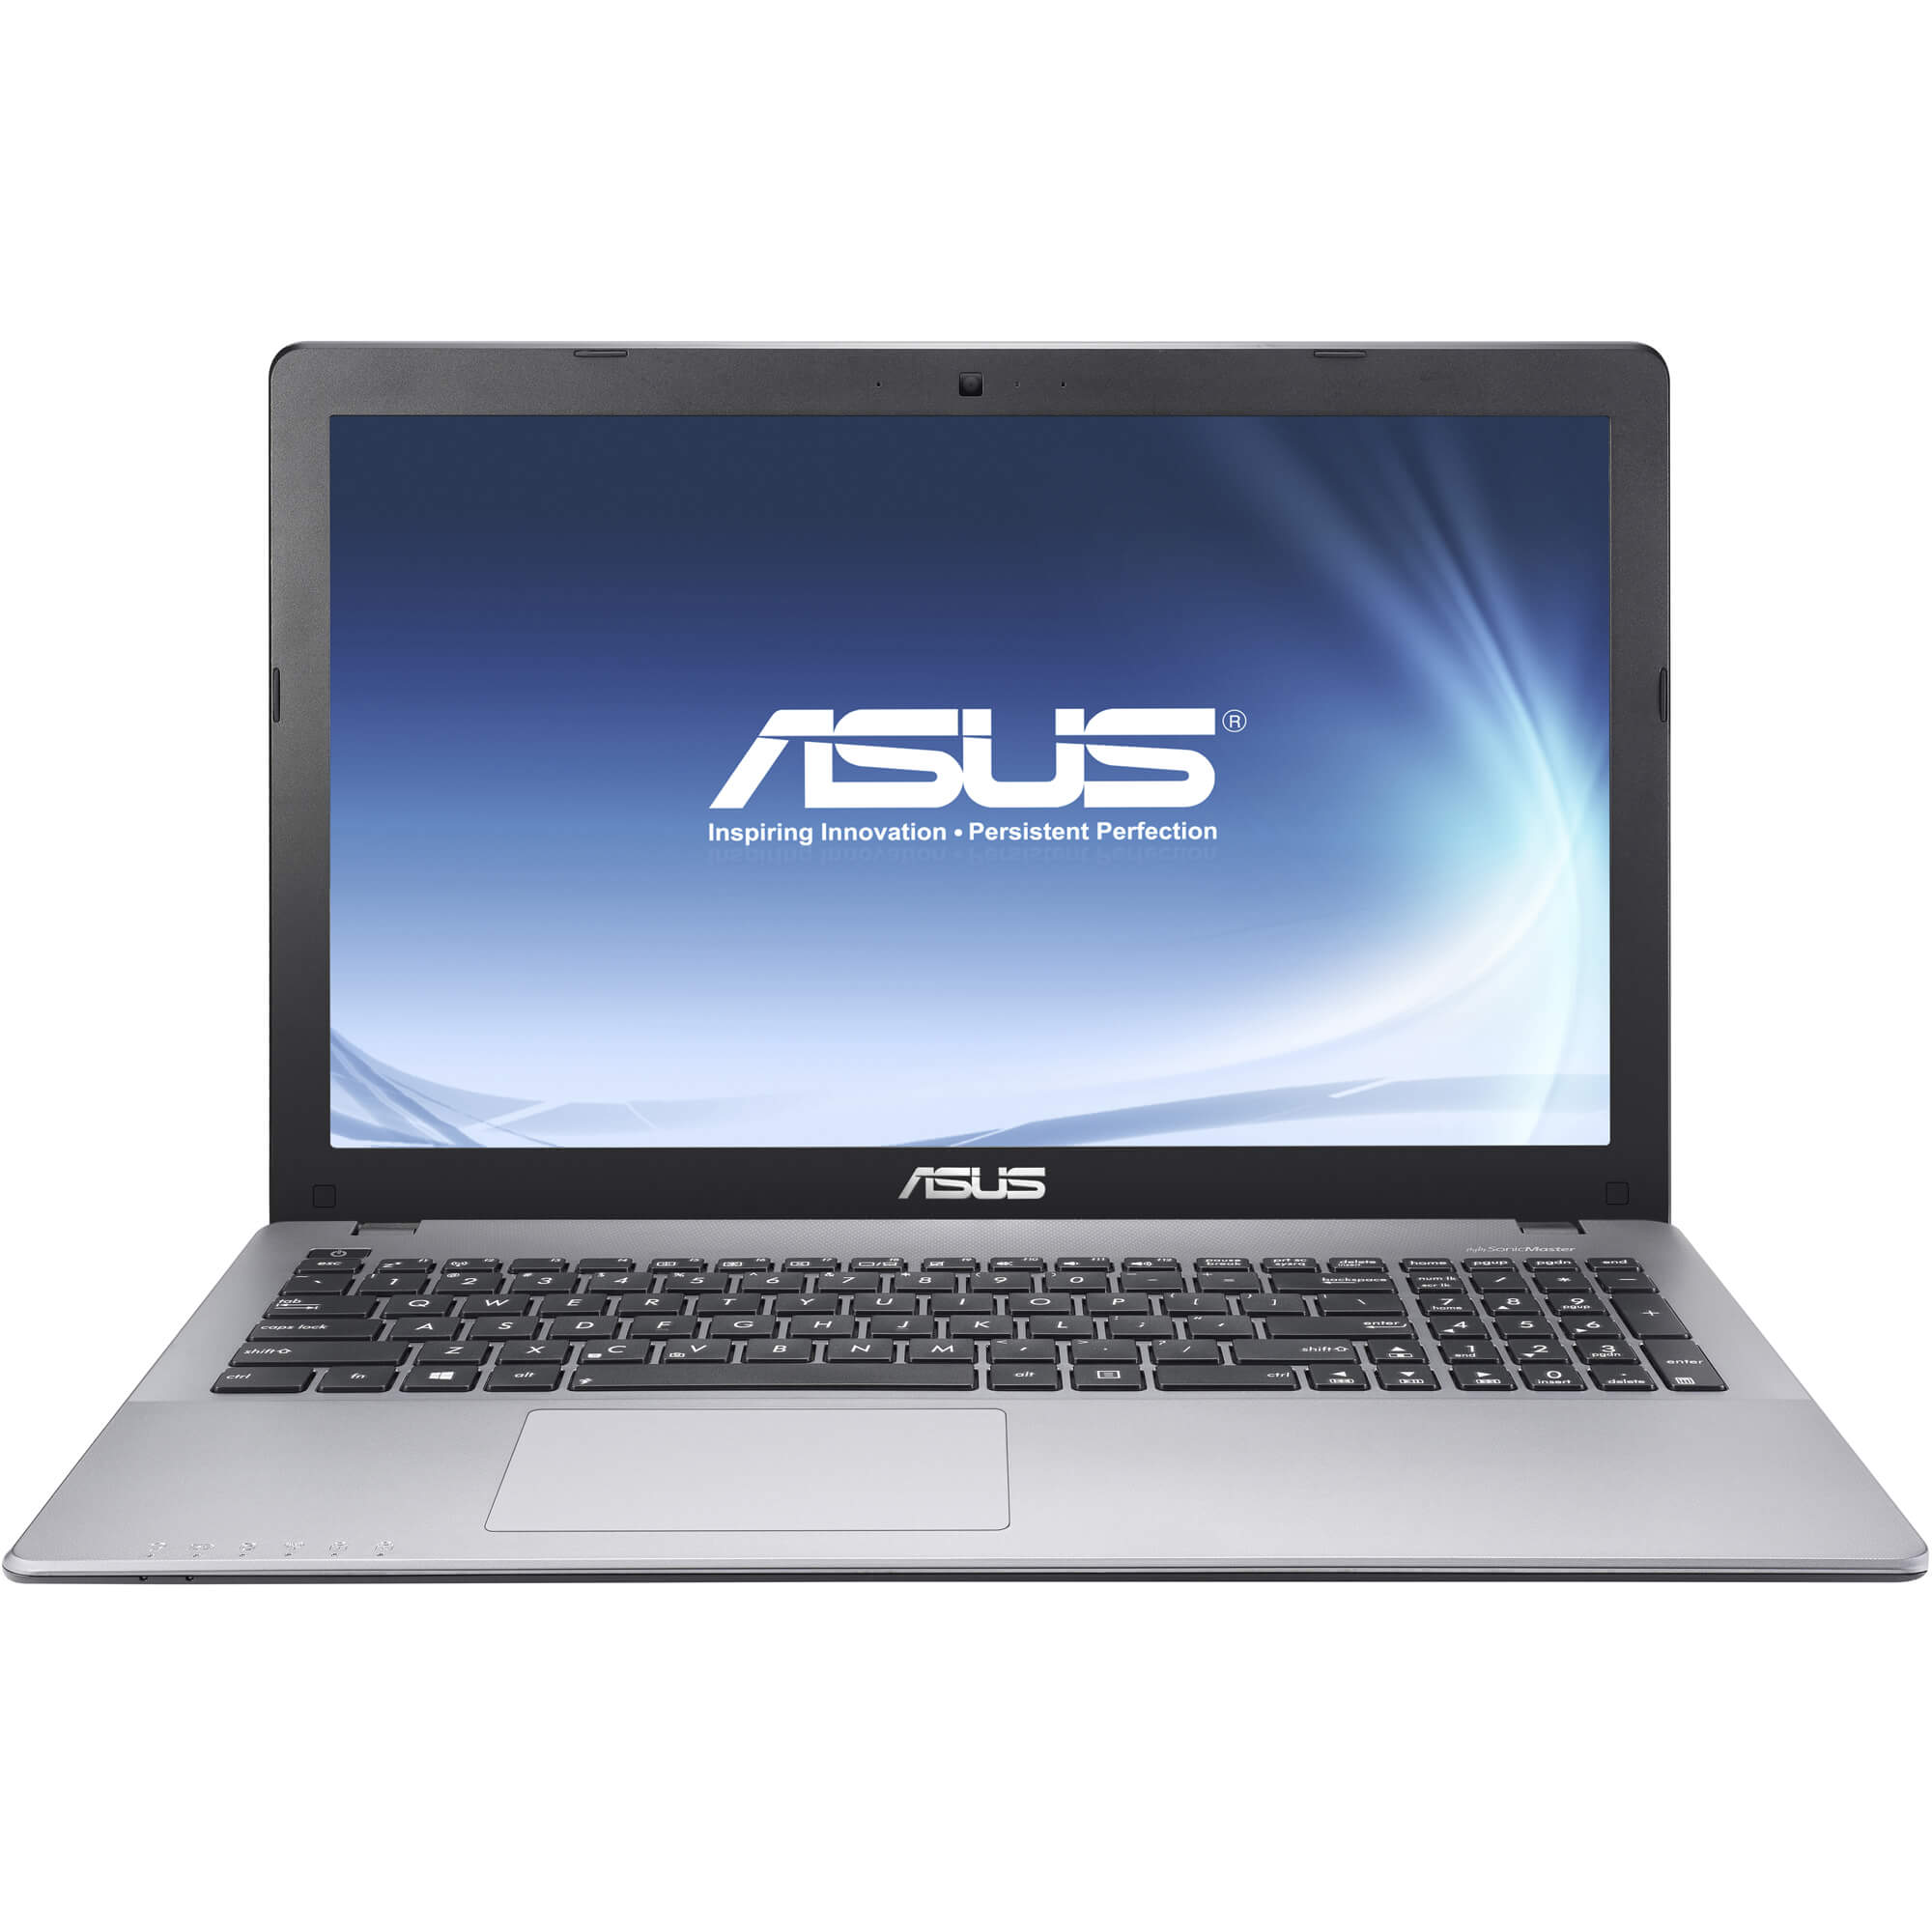  Laptop Asus X550ZE-DM049D, AMD A10-7400P, 8GB DDR3, HDD 1TB, AMD Radeon R5 M230 2GB, Free DOS 